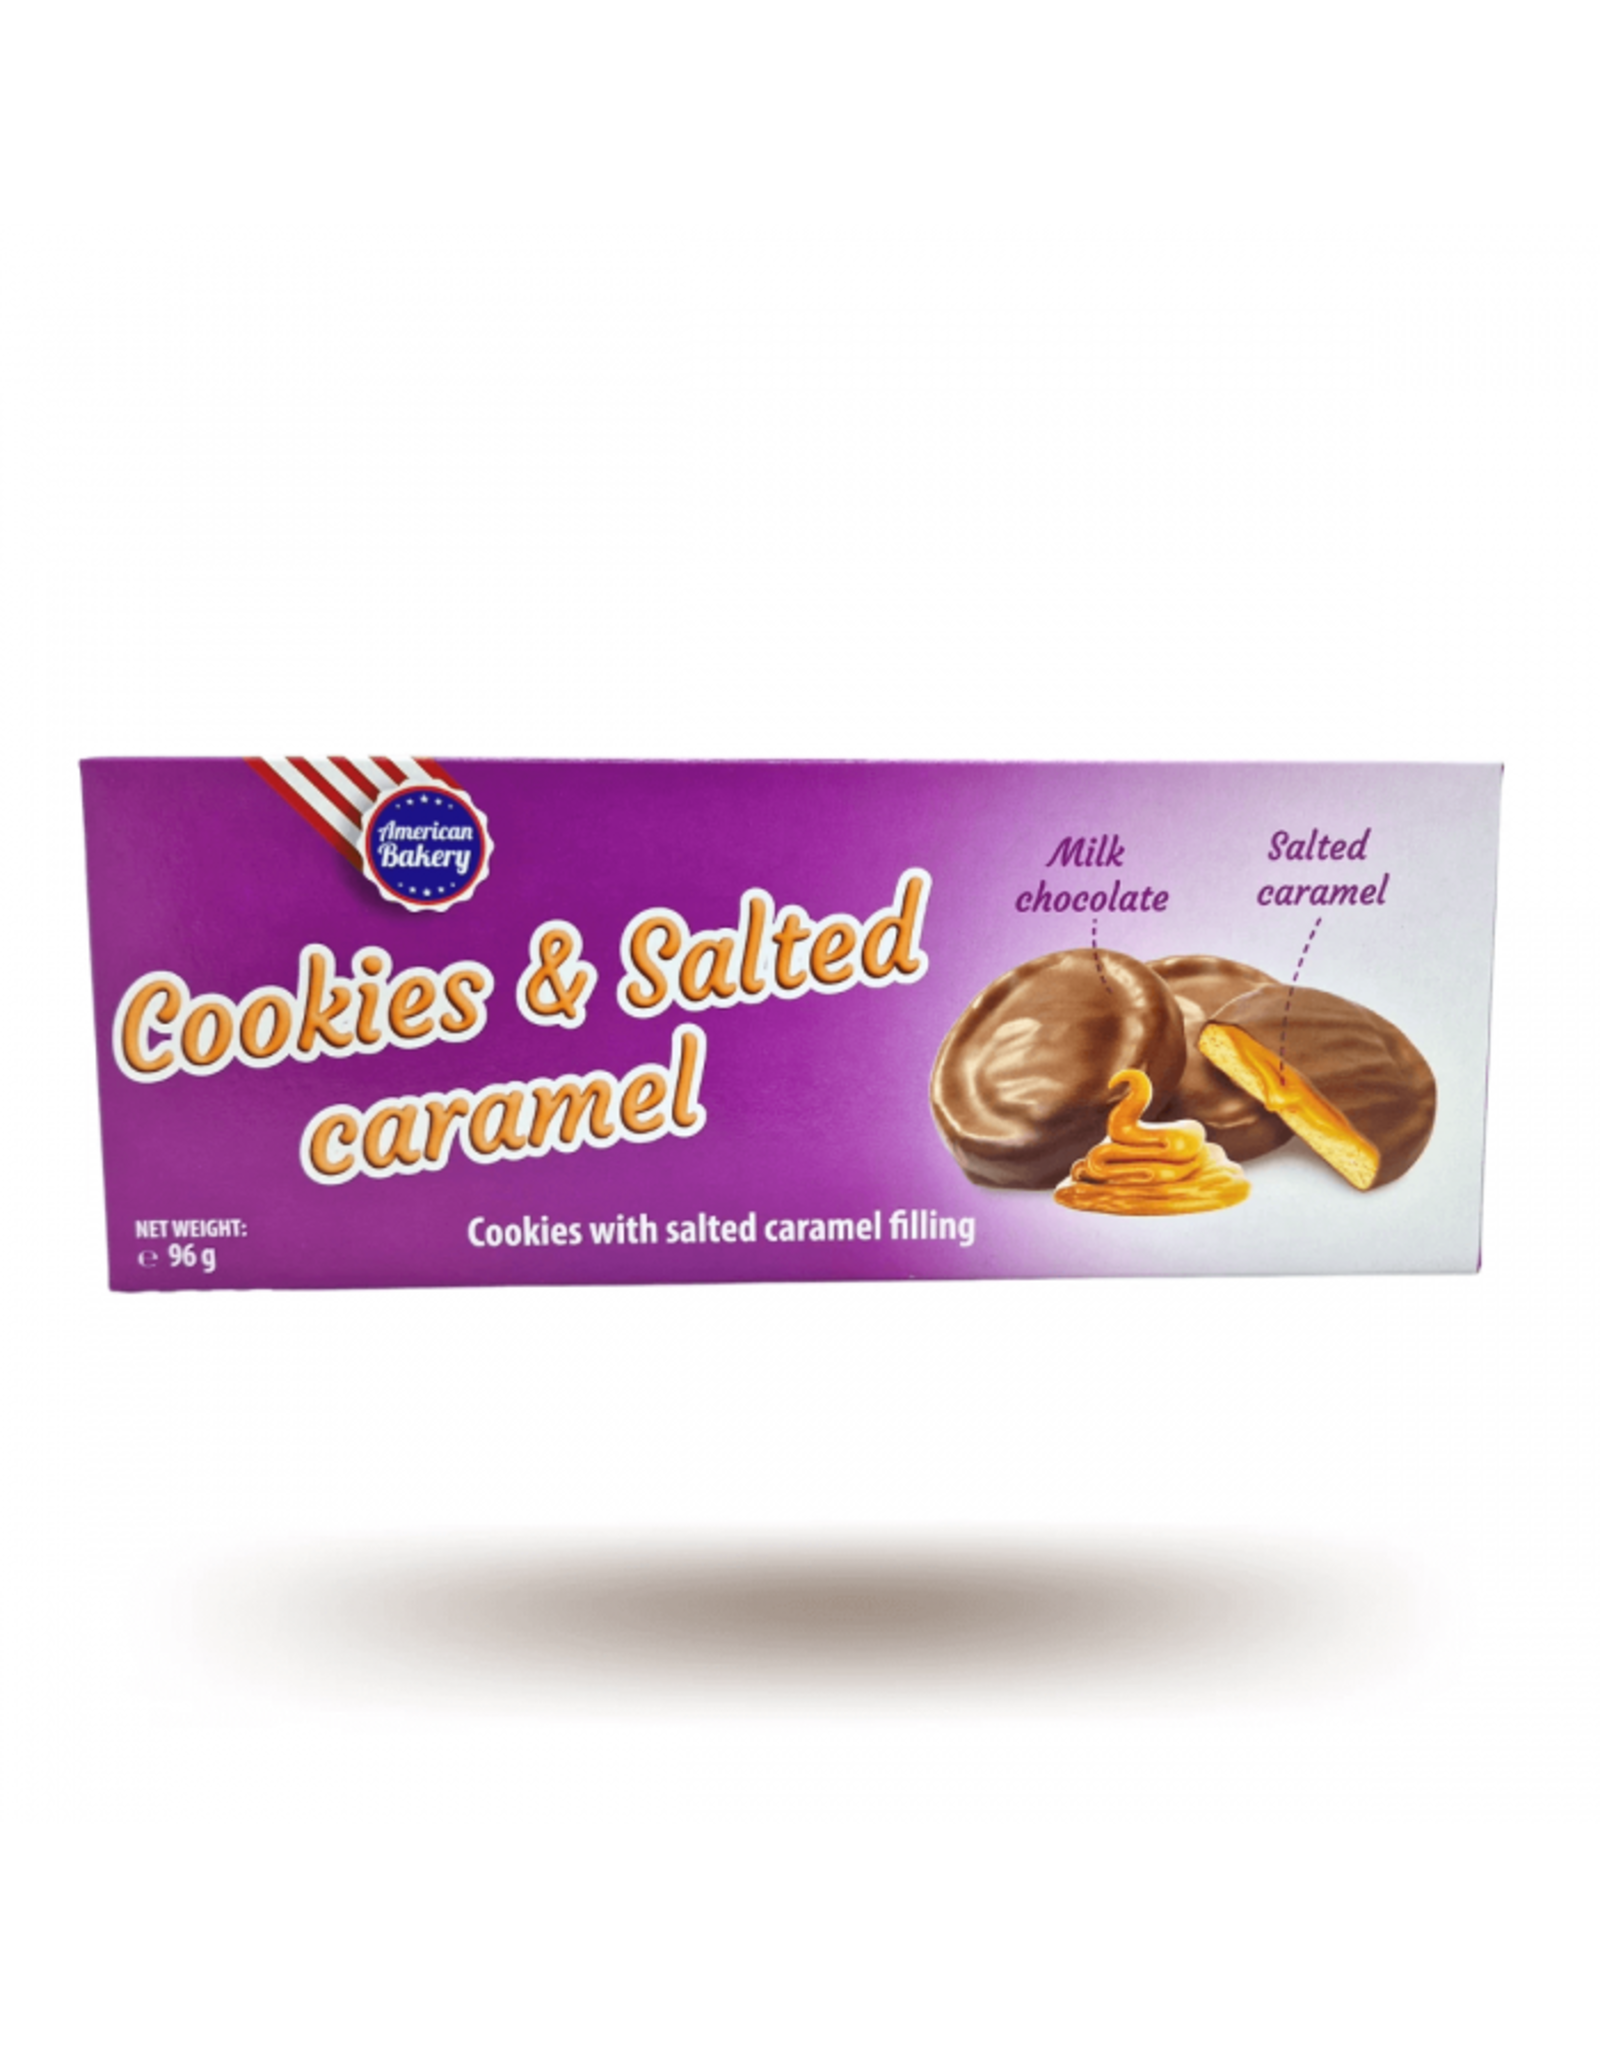 American Bakery - Cookies & Salted caramel - 96g